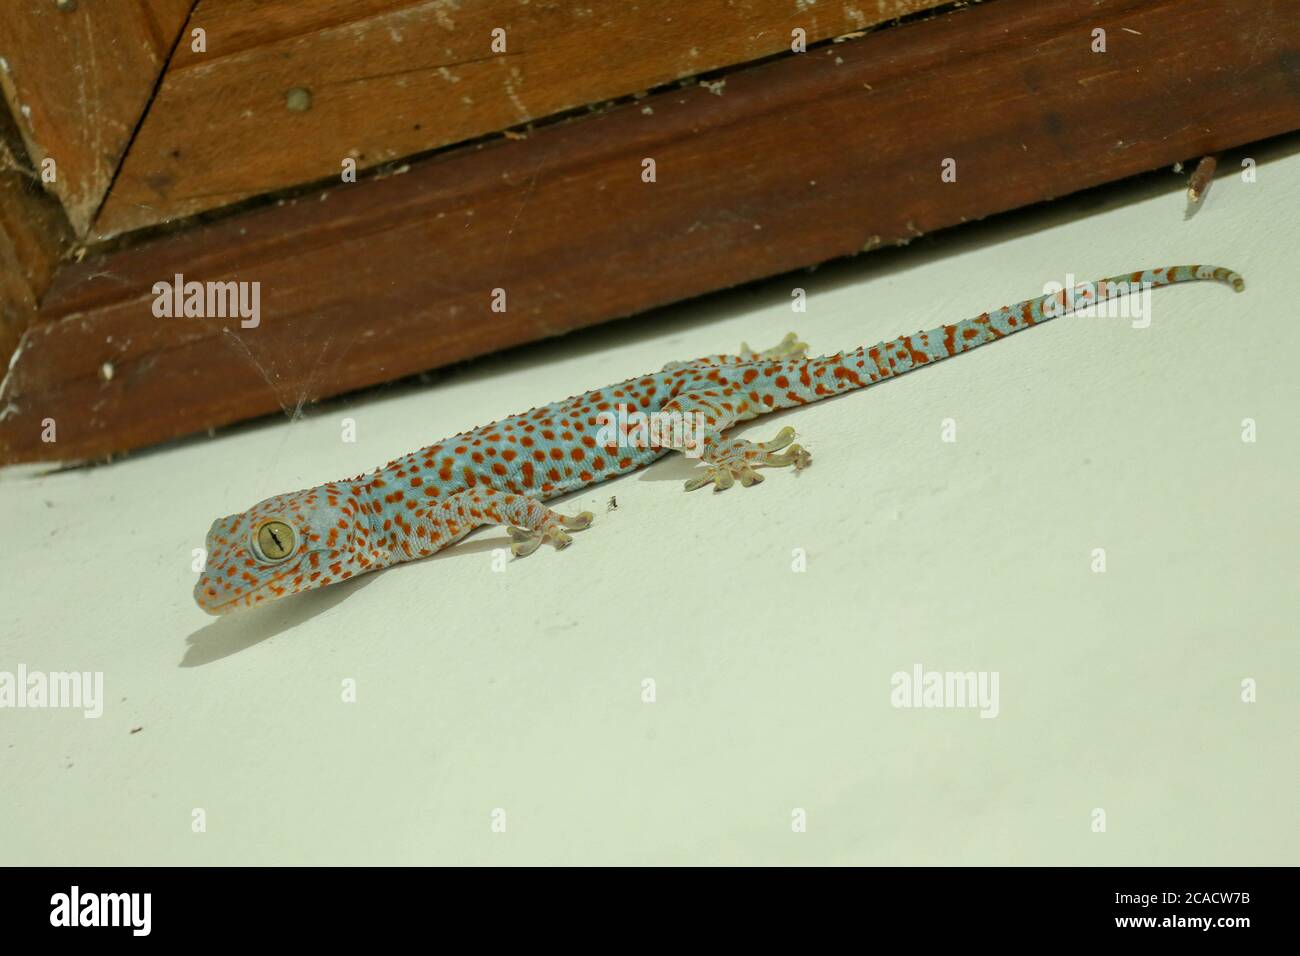 Gekkota Gekko Gecko Tokay Tokkae Lizard on a White Background Isolated even  lighting Stock Photo - Alamy